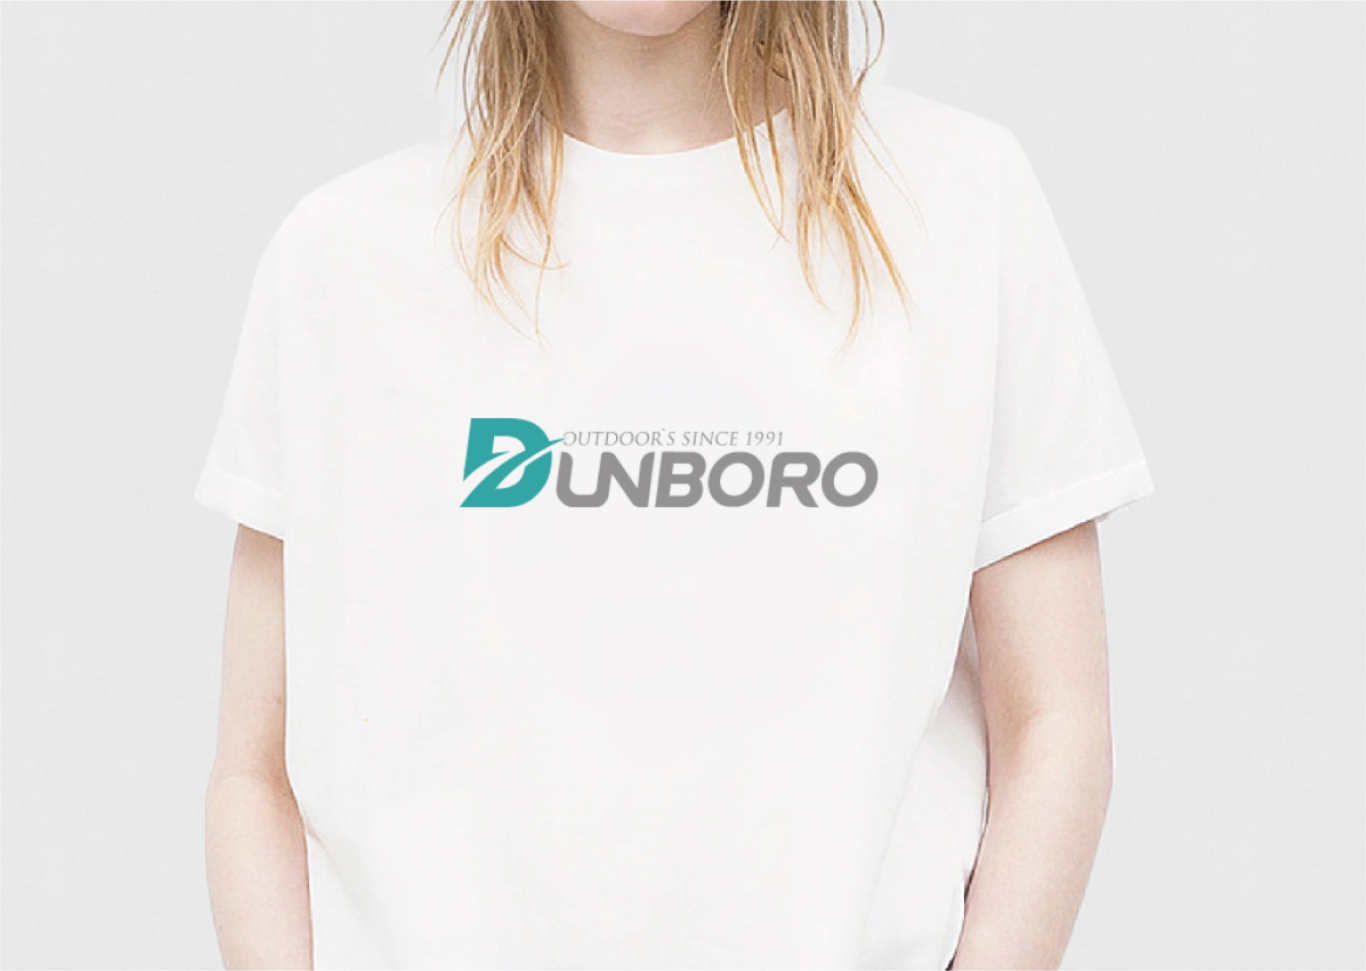 Dunboro运动户外品牌策划及方案设计logo+vis图26